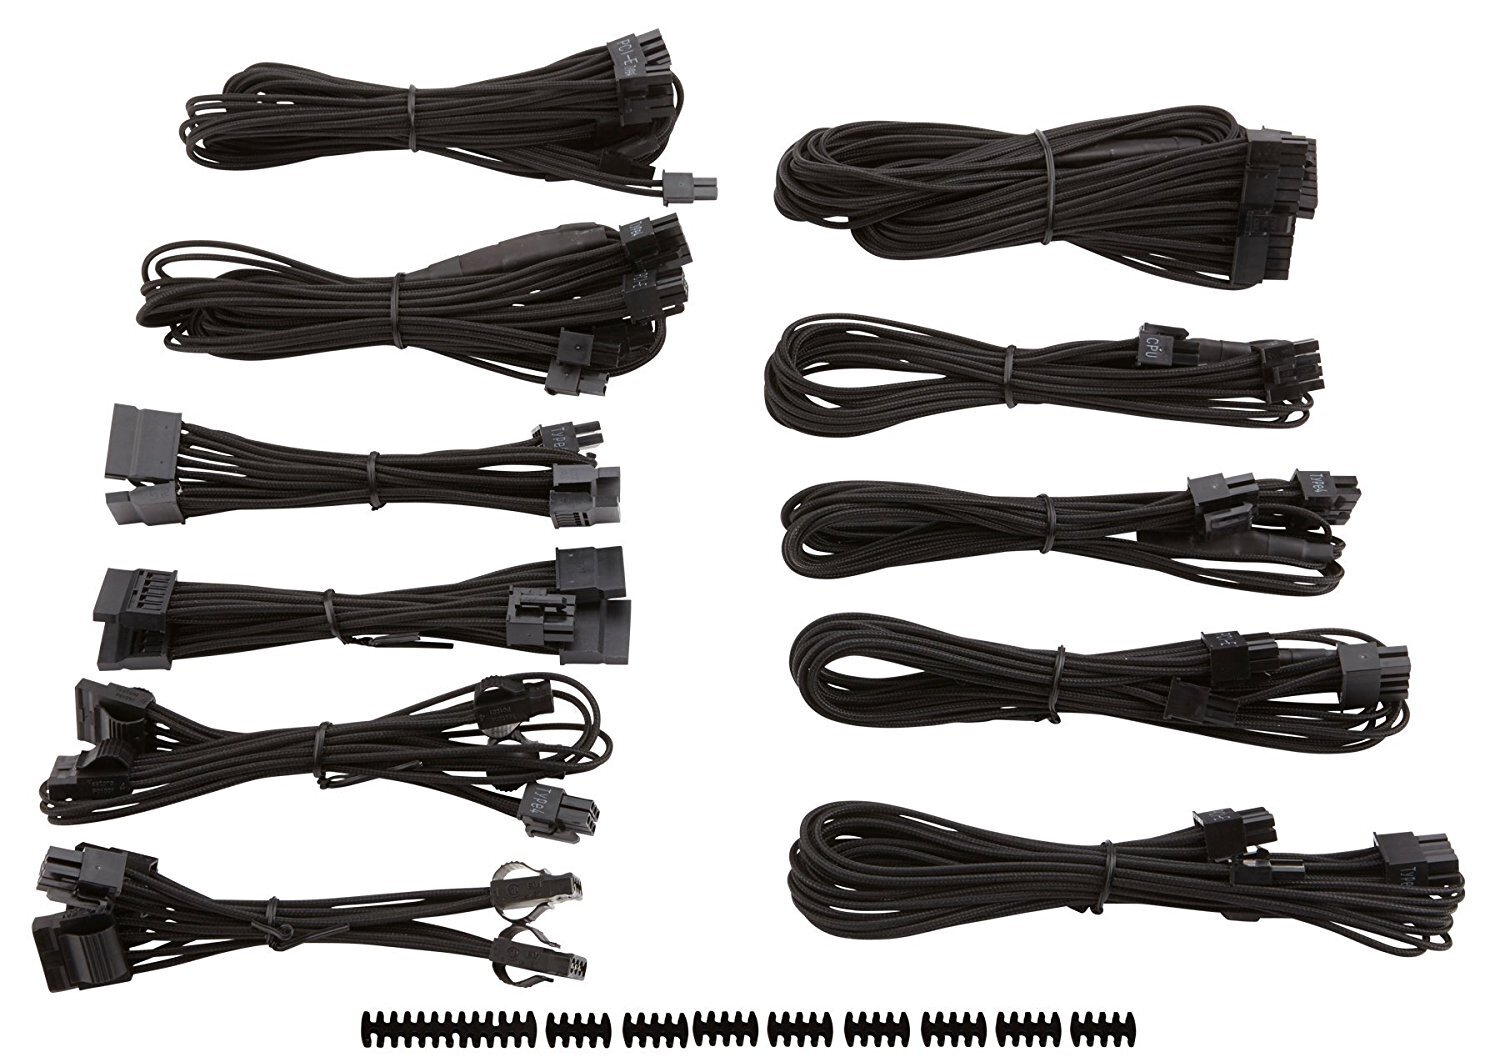 Prædiken slå I Buy Corsair Premium Individually Sleeved PSU Cable Kit Pro Package, Type 4  (Generation 3) online Worldwide - Tejar.com